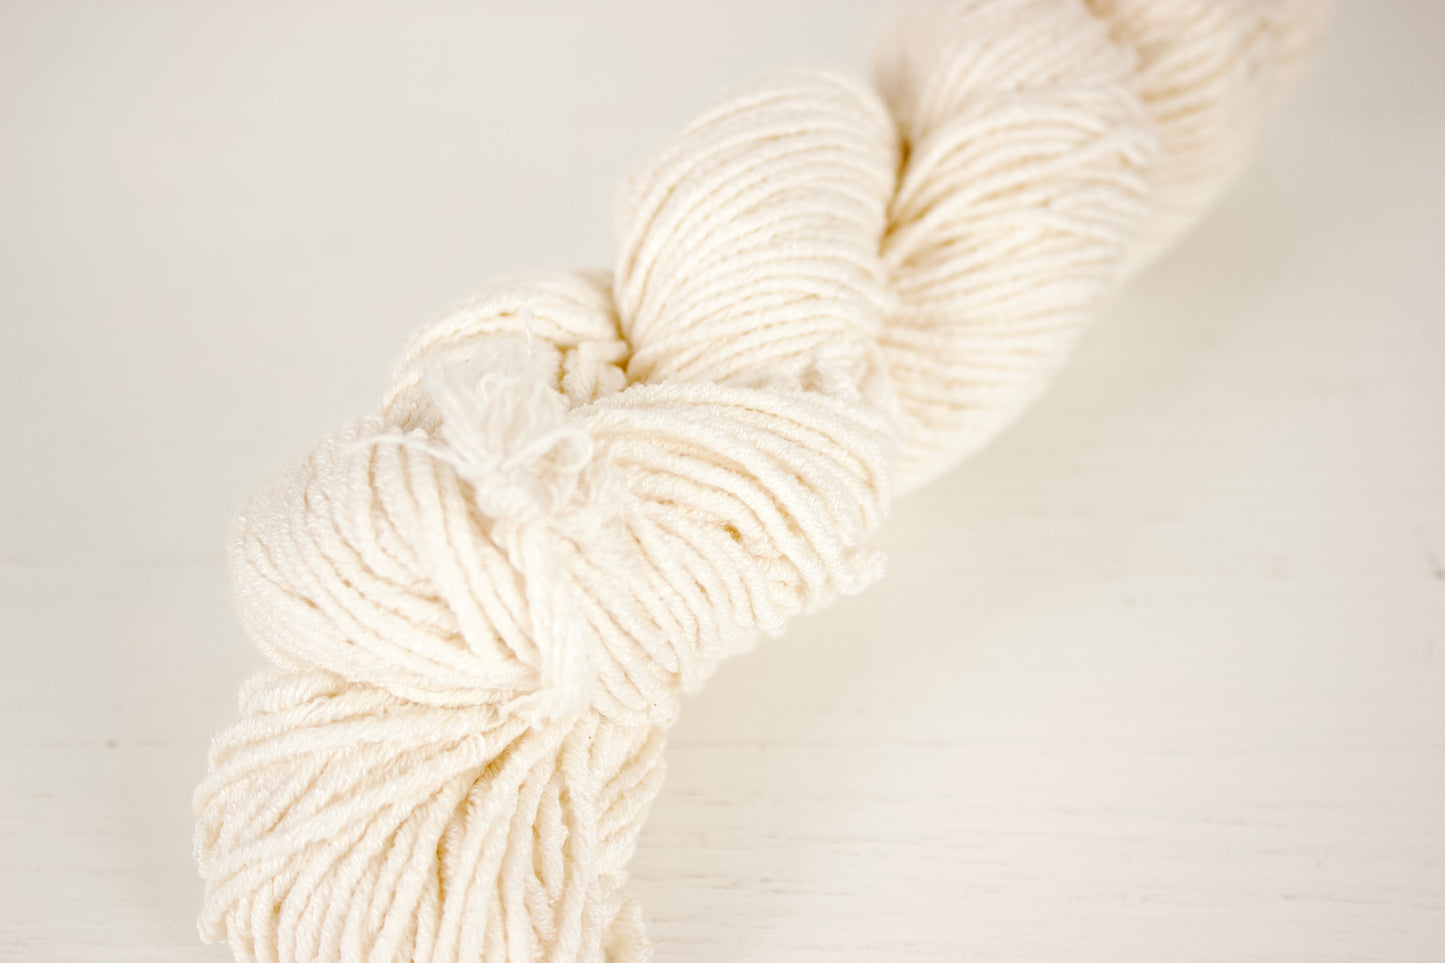 Wholesale Hyades - Vegan Stretchy Worsted Yarn Base for Dyers, undyed ecru, tencel, organic cotton, elastic